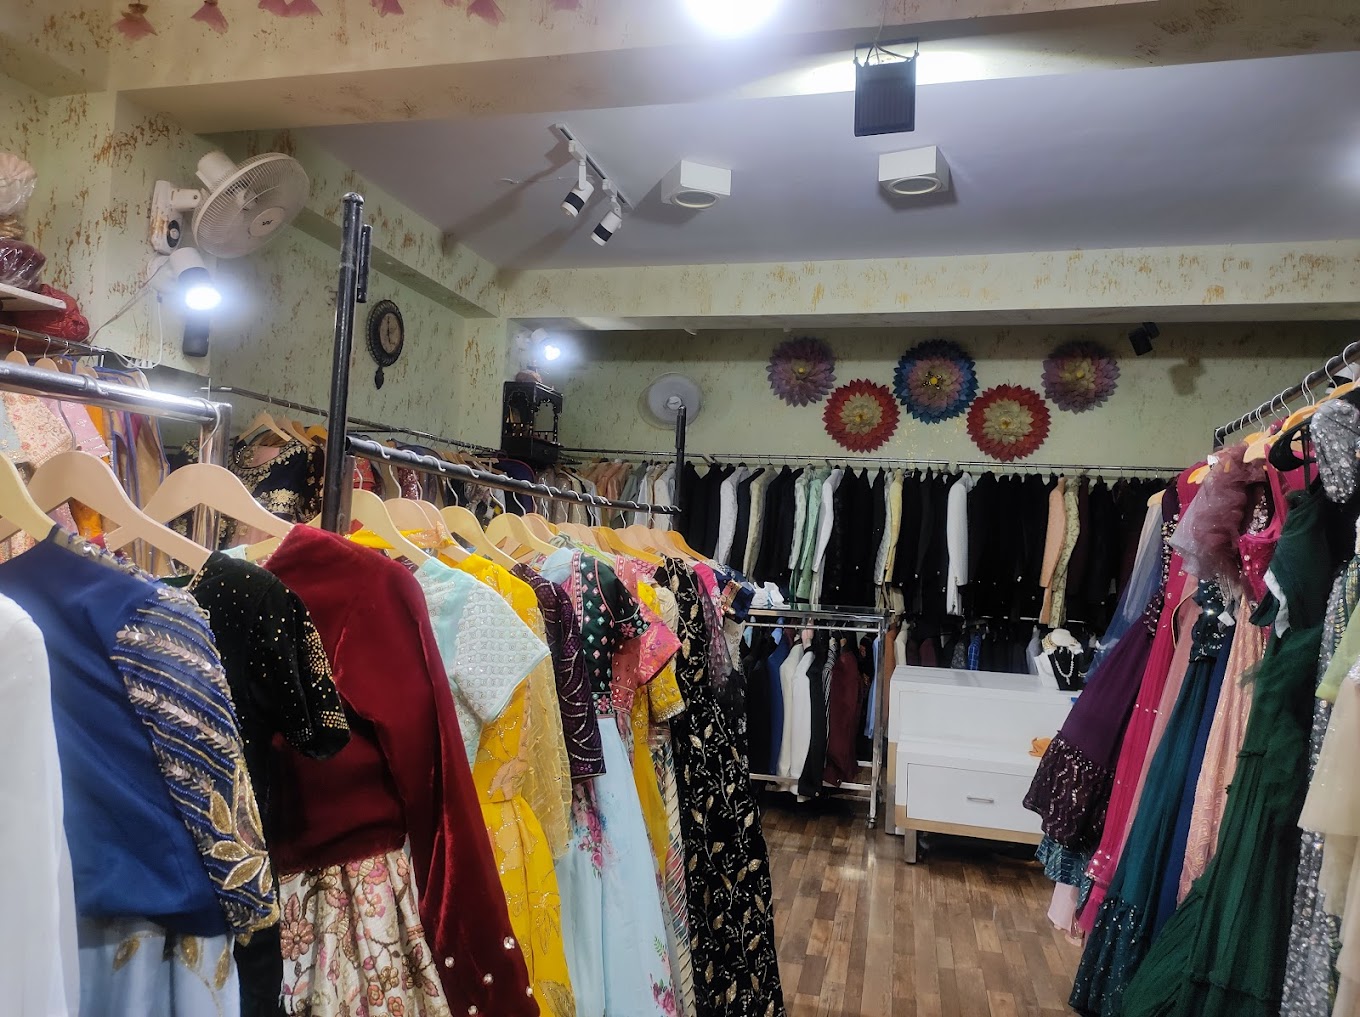 Studio41Jaipur - Dresses on Rent in Jaipur